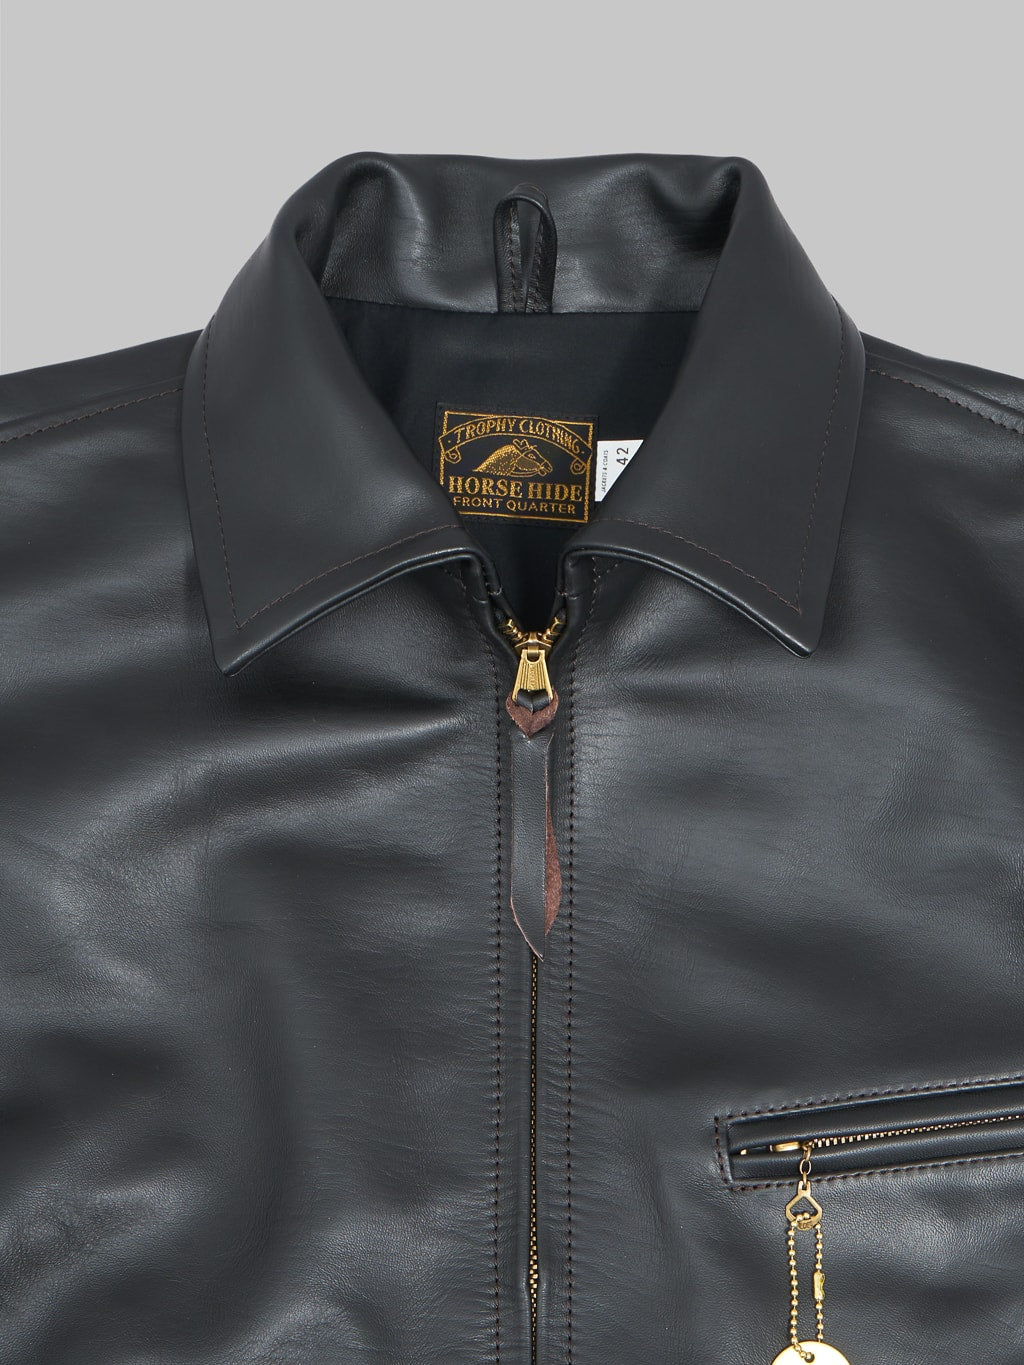 Trophy Clothing Humming Bird Horsehide leather Jacket Black  collar